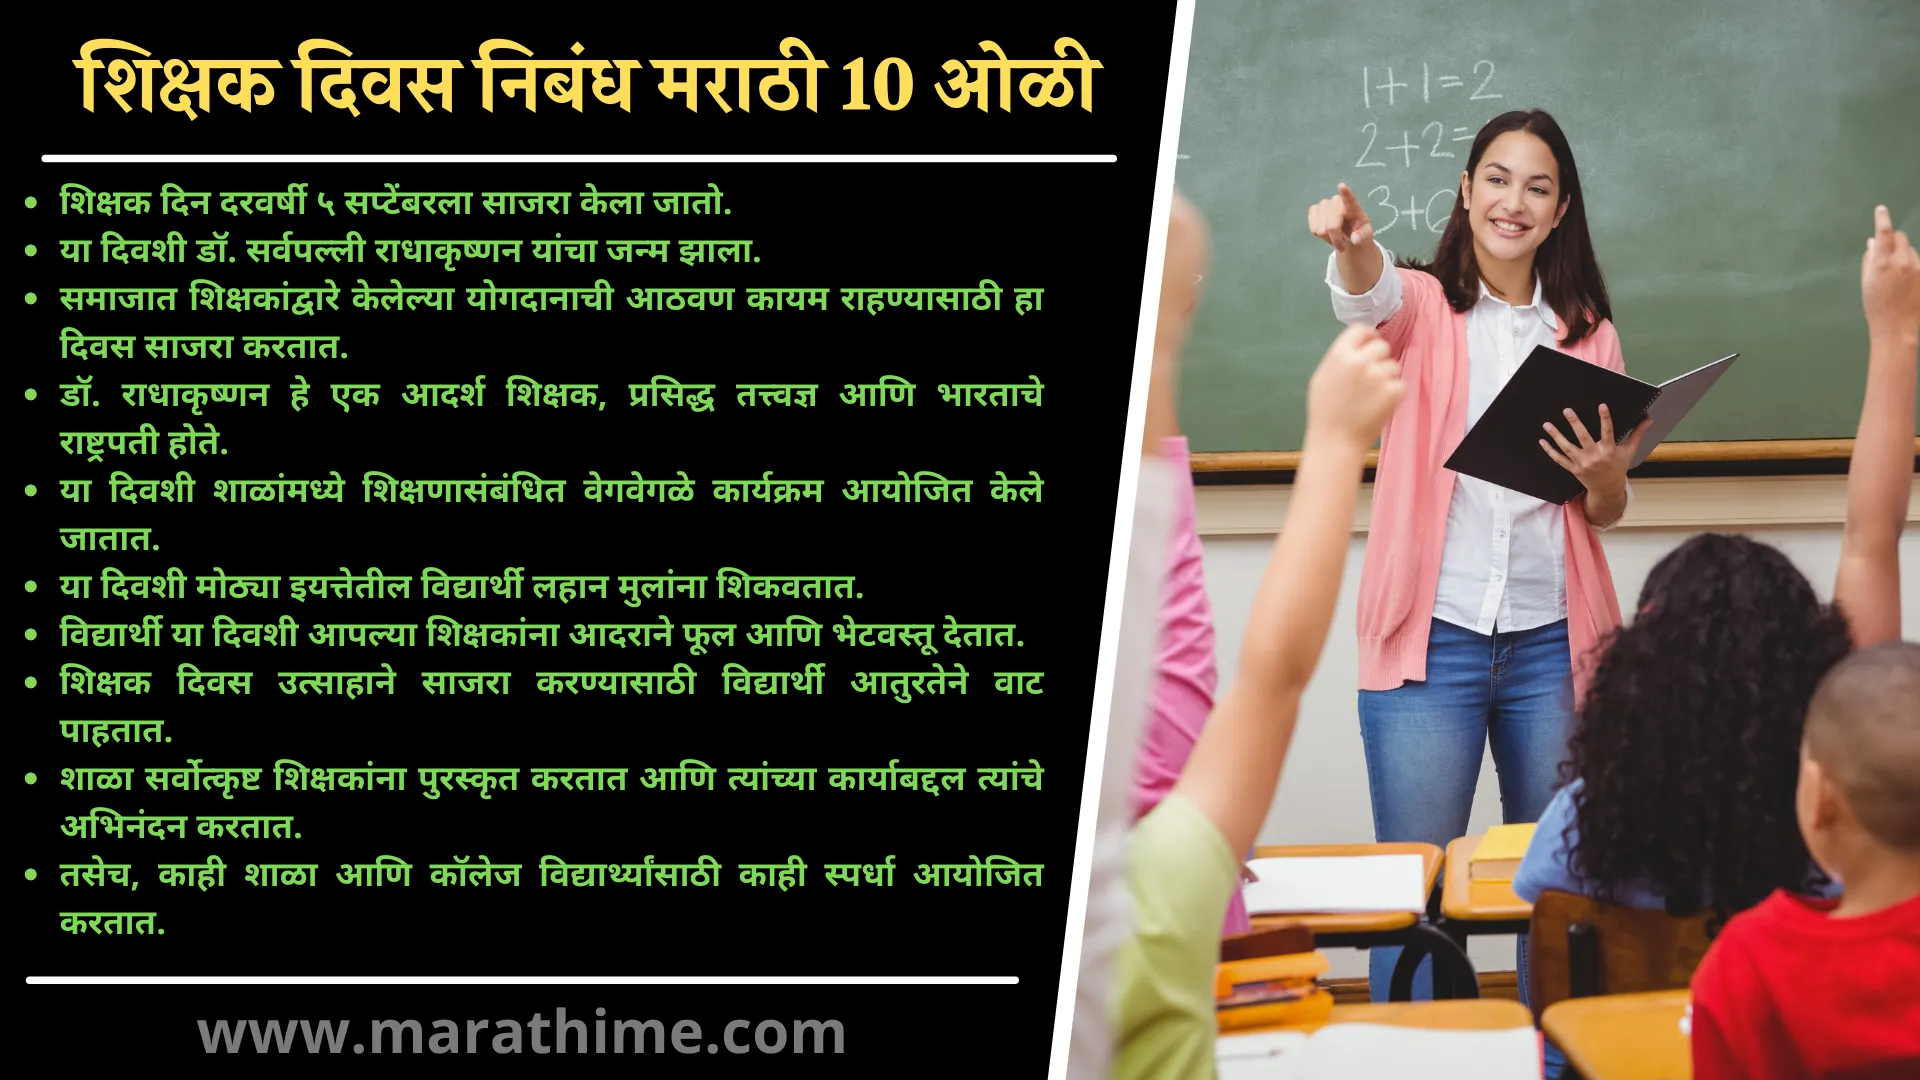 शिक्षक दिवस निबंध मराठी 10 ओळी-10 Lines on Teachers Day in Marathi